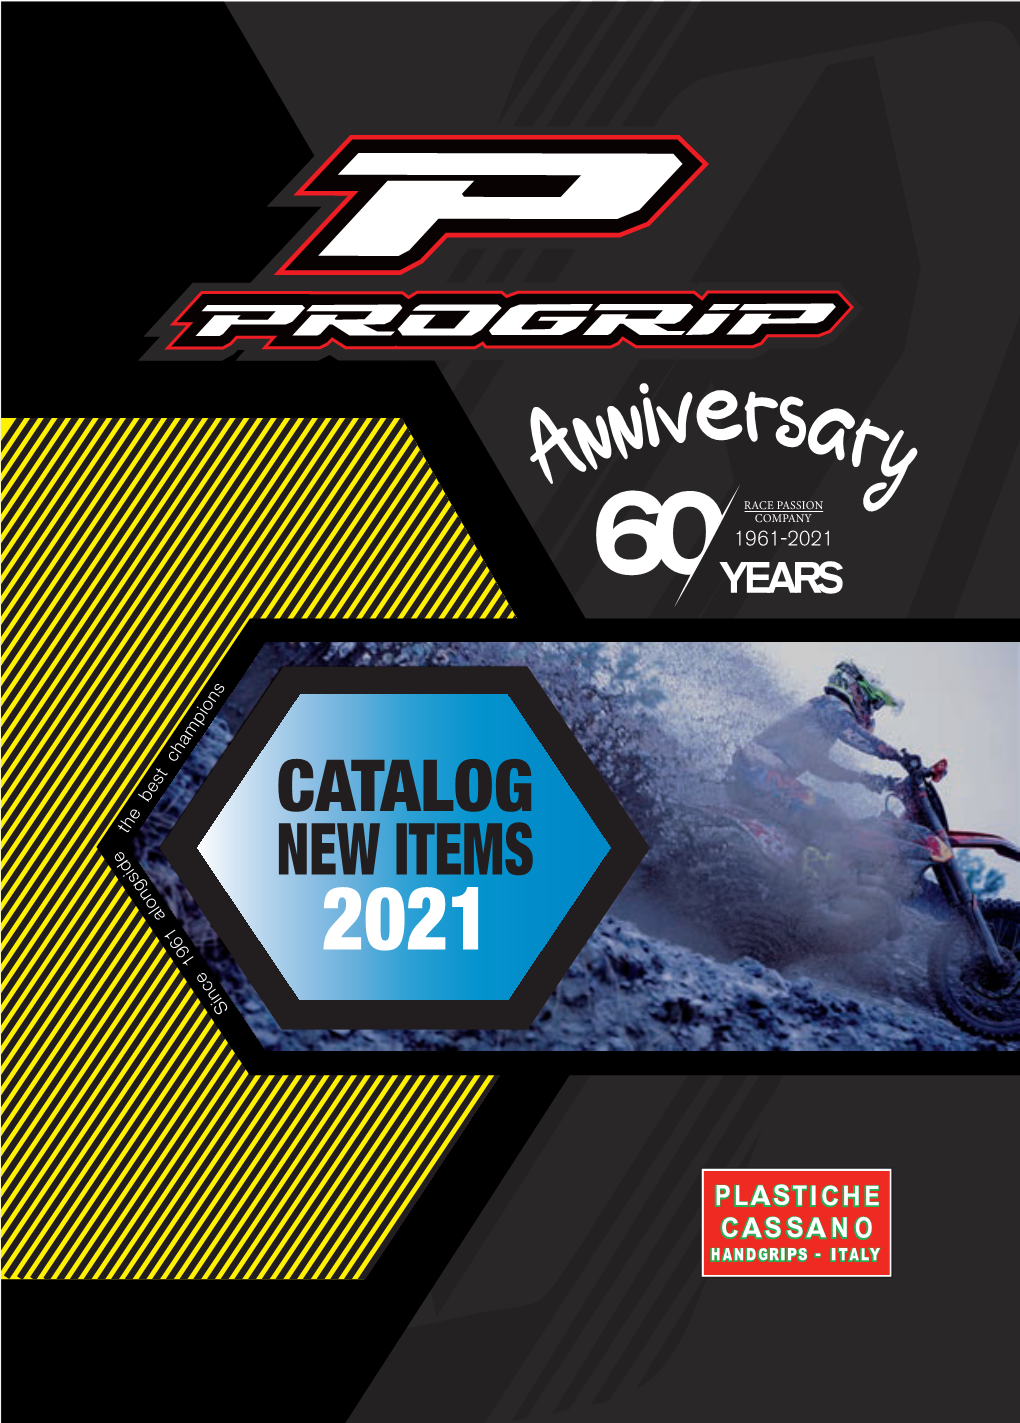 Catalog New Items 2021